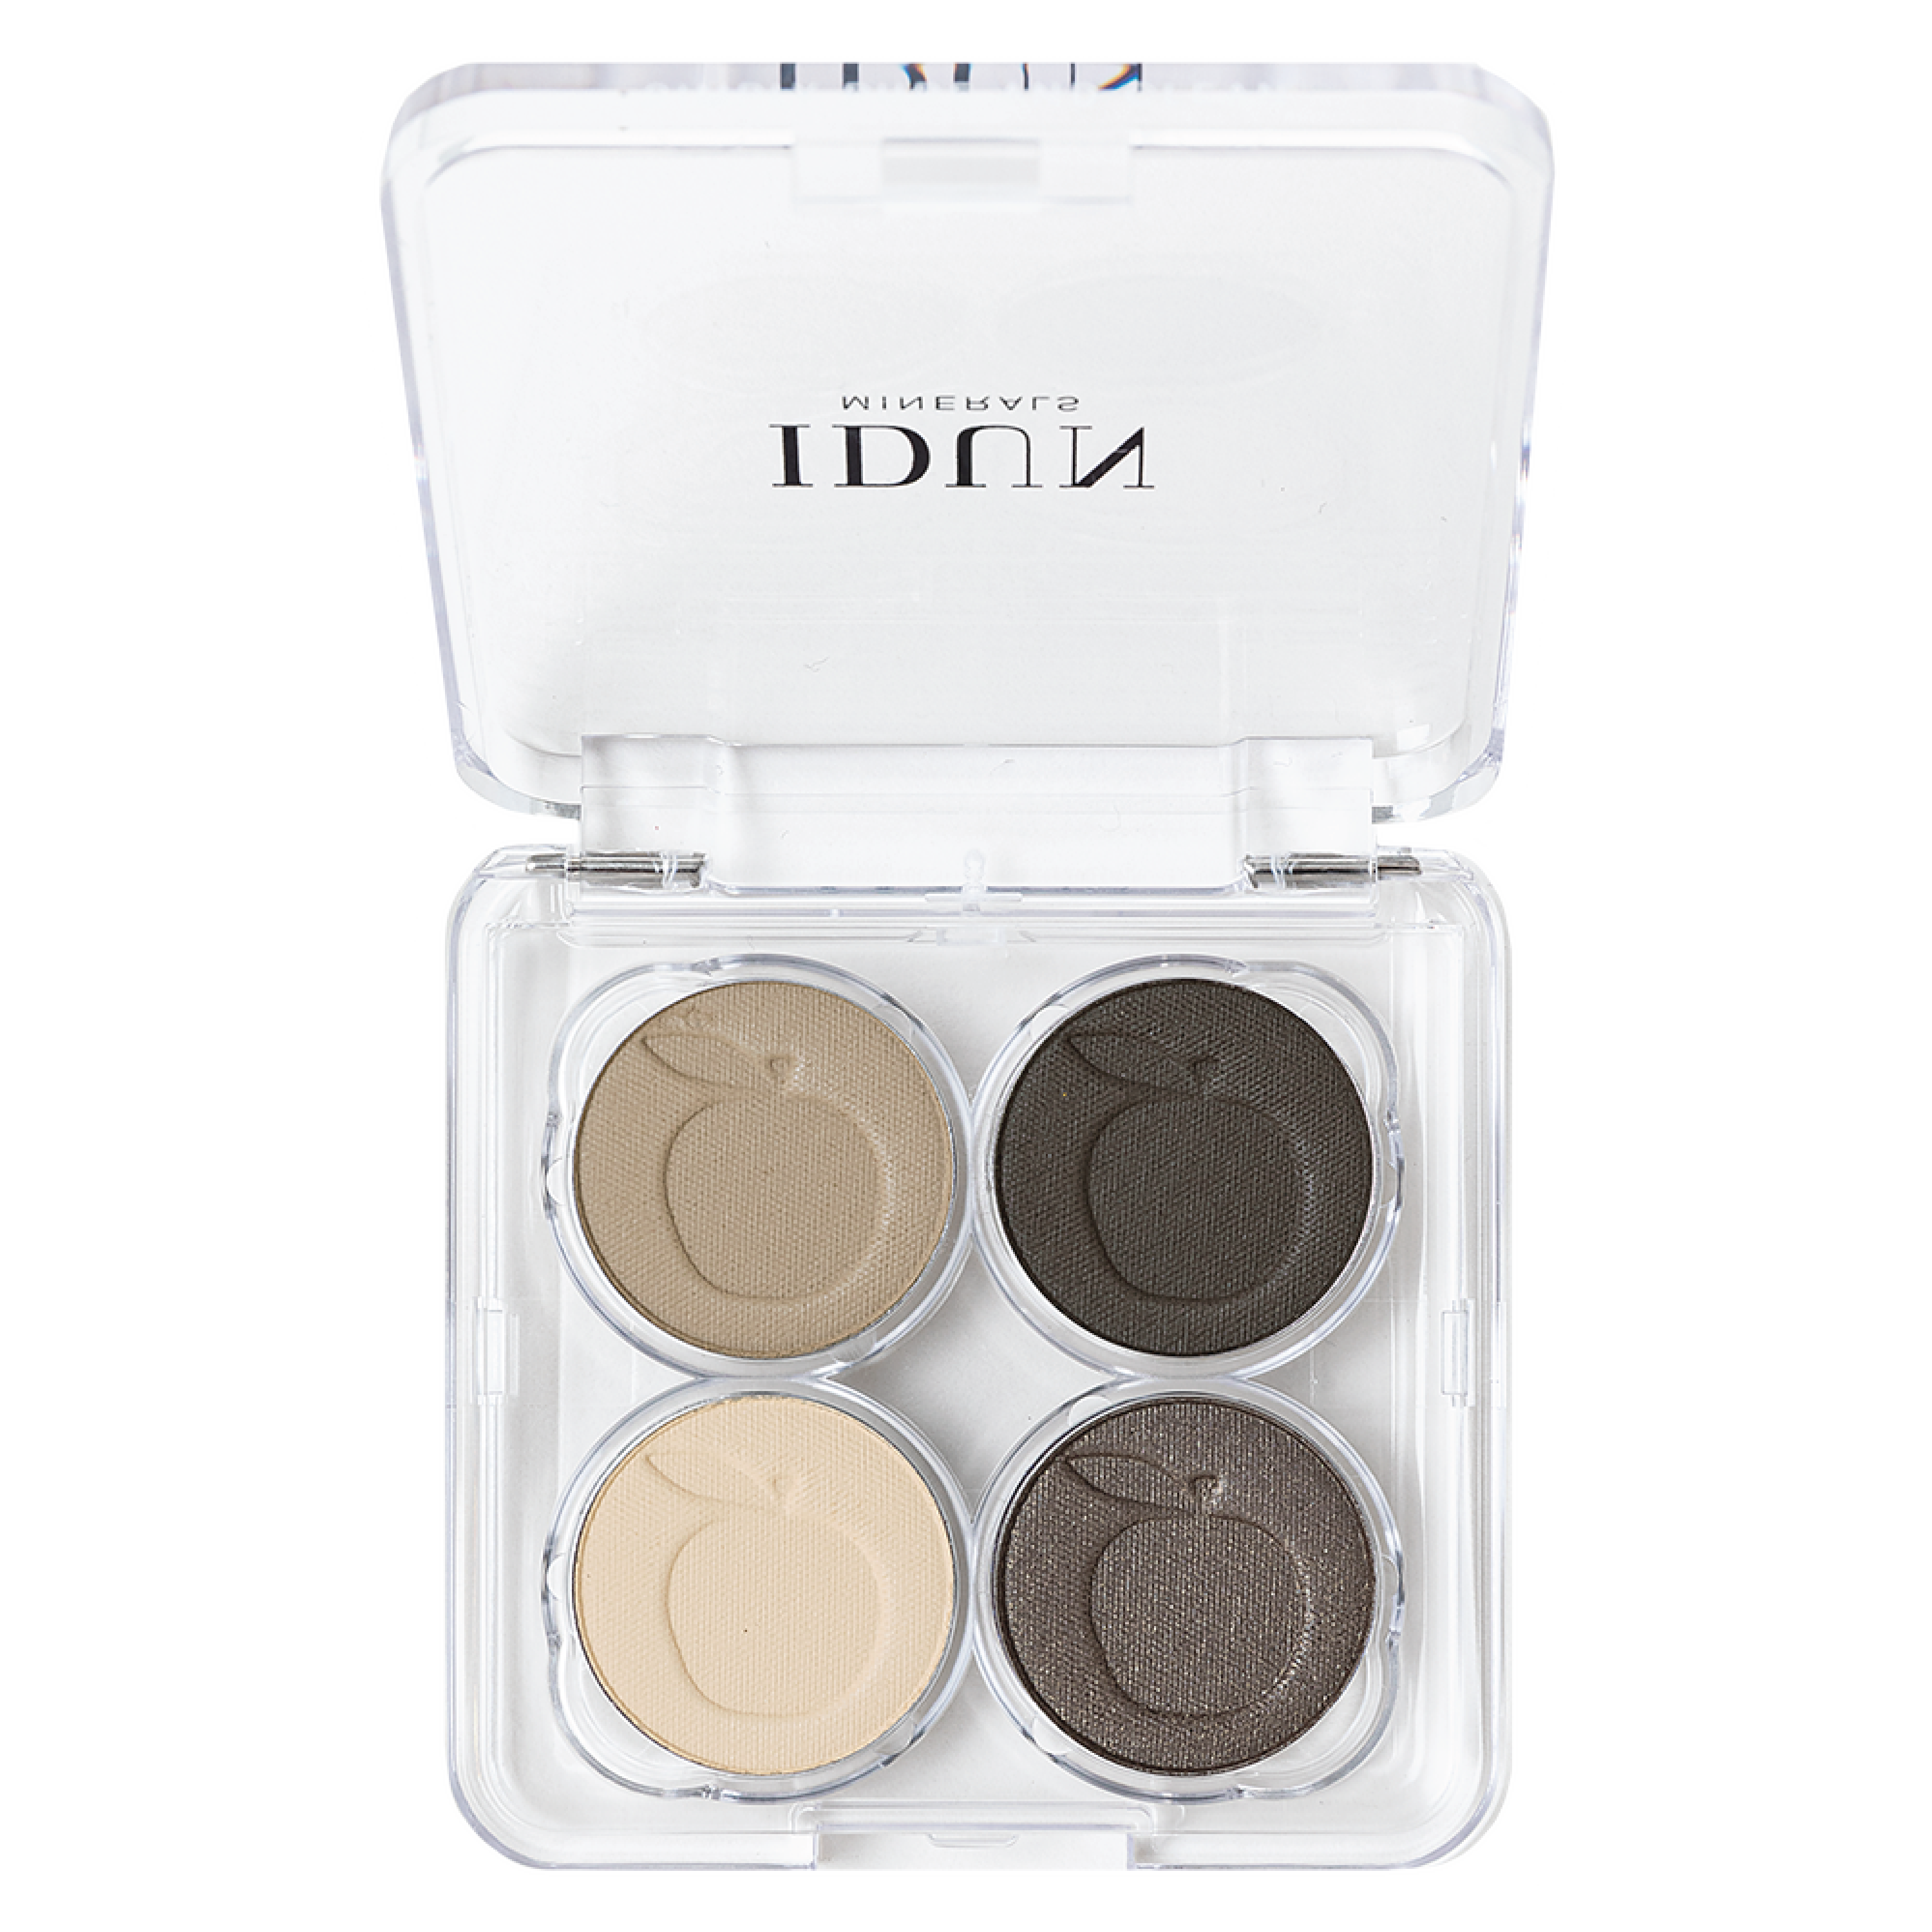 IDUN Minerals Eyeshadow Palette, Lejongap, 4 g